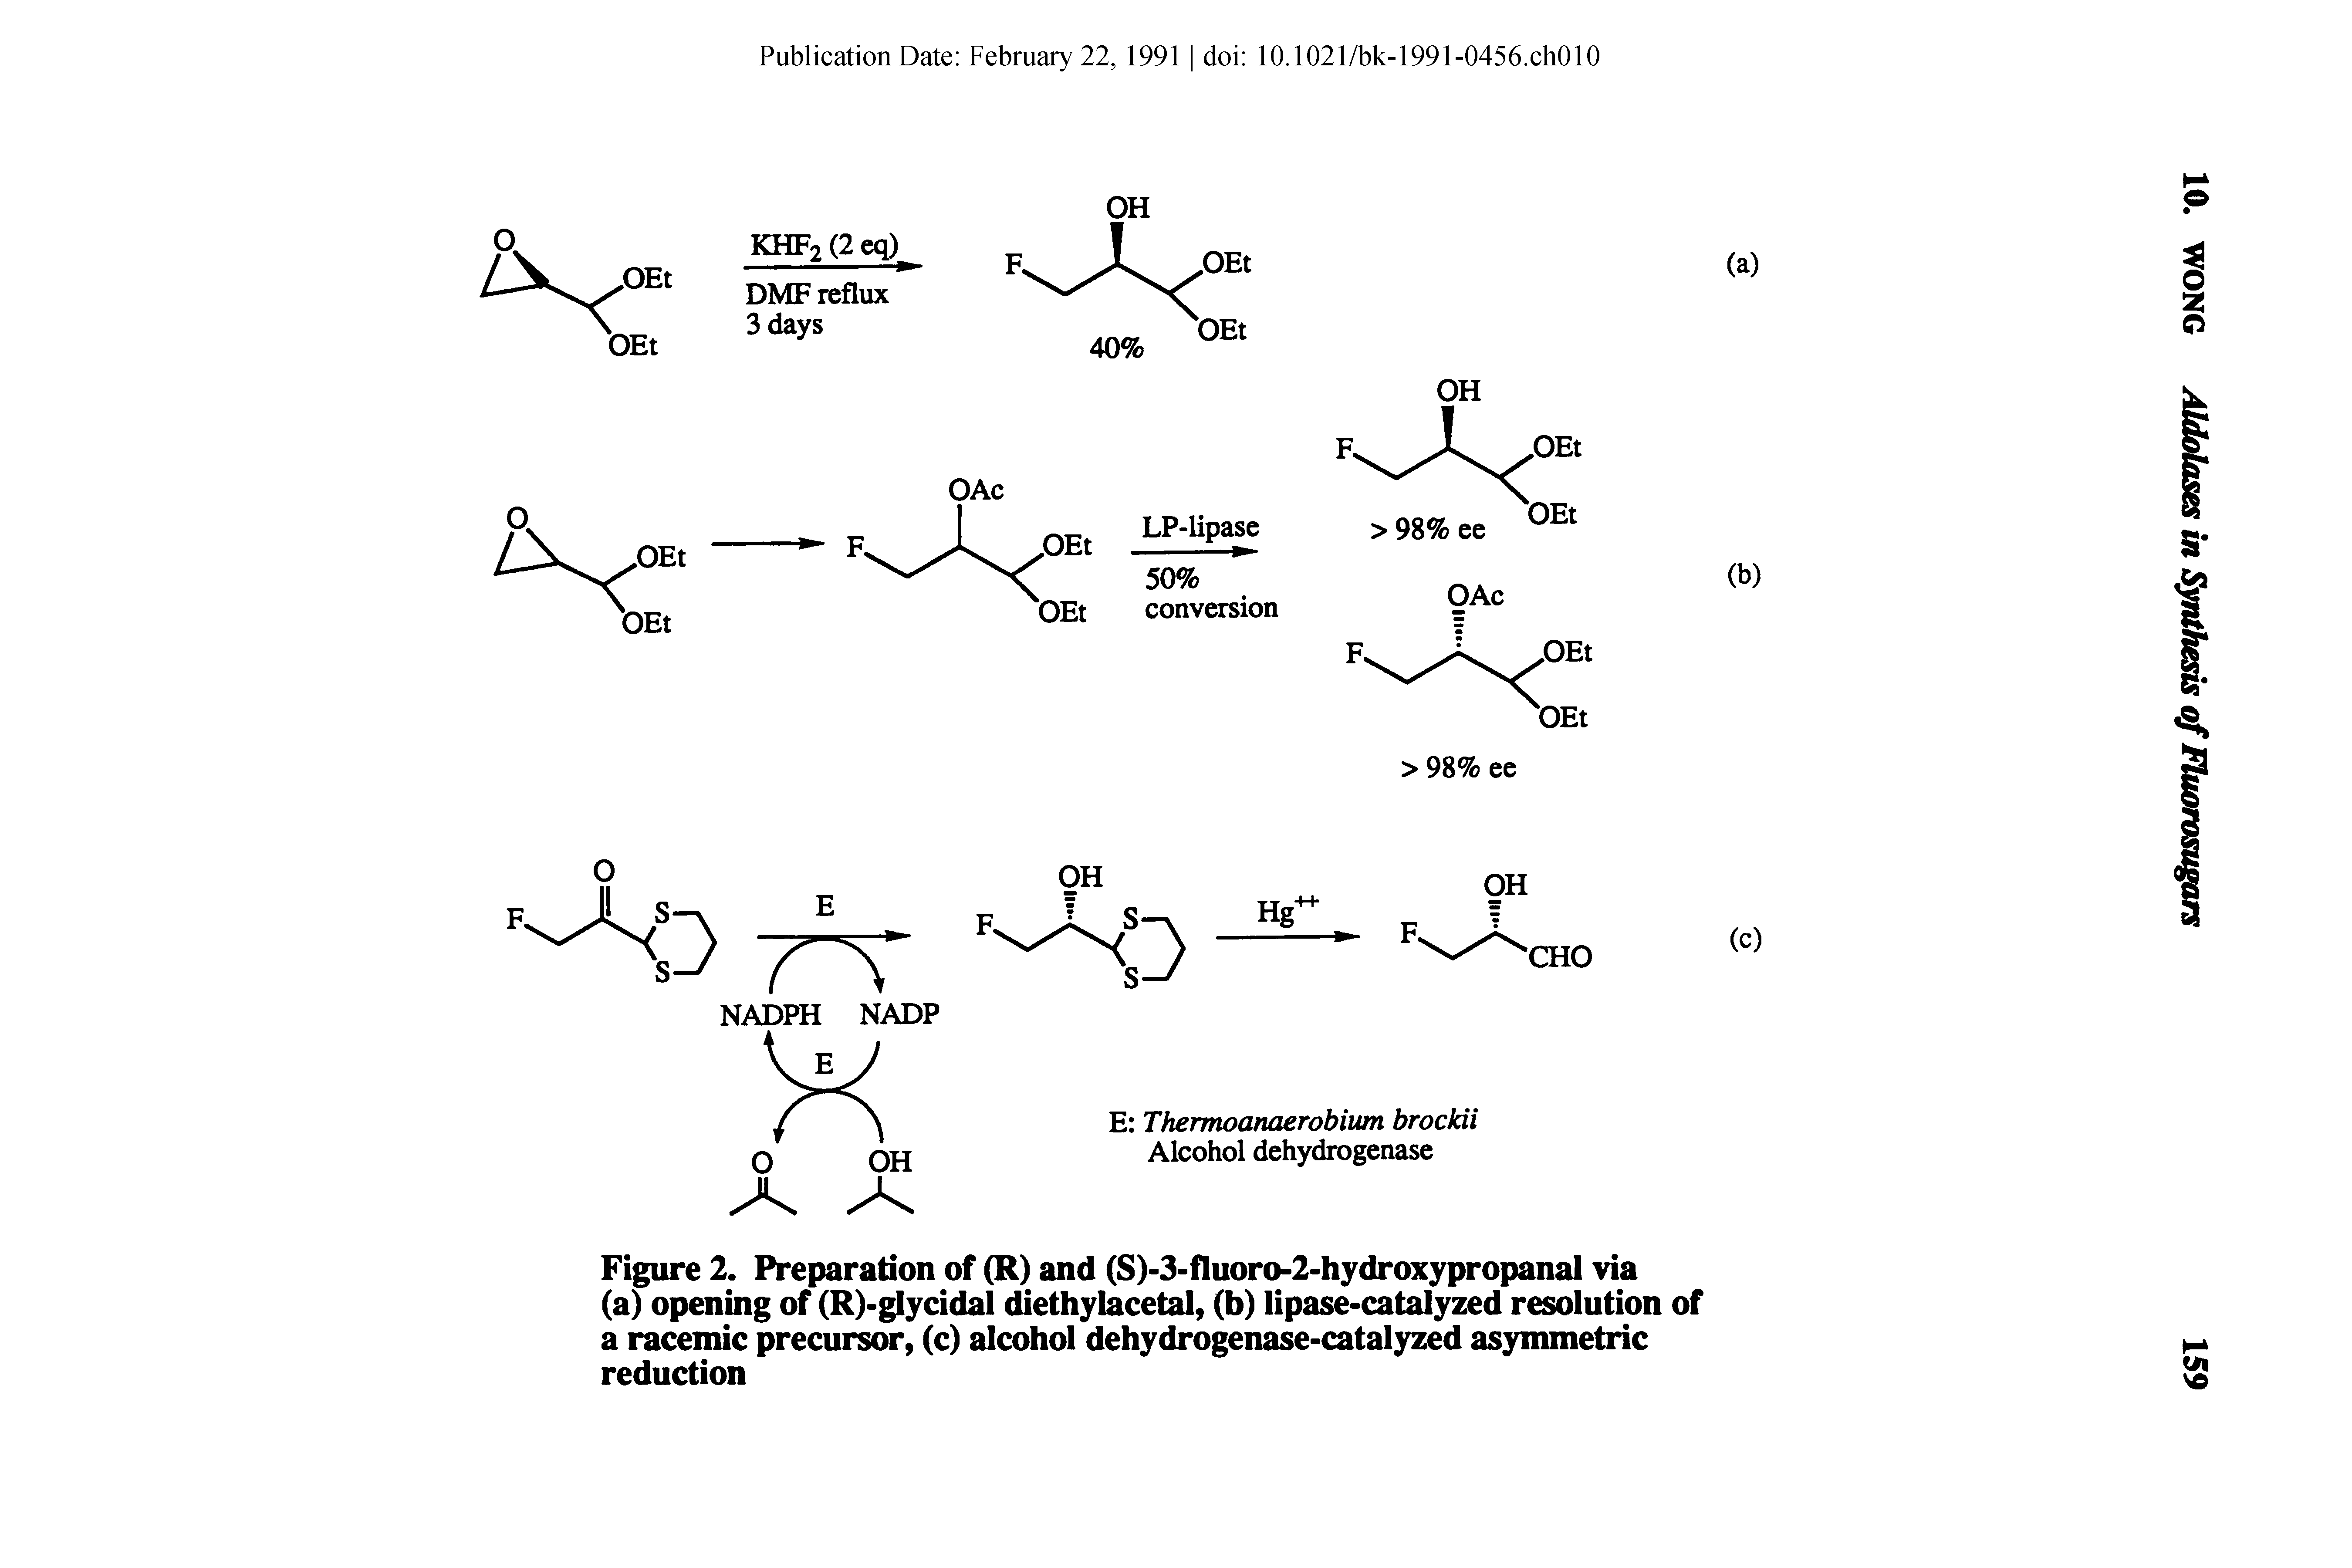 Figure 2. Preparation of (R) and (S)-3-fluoro-2-hydroxypropanal via (a) opening of (R)-glycidal diethylacetal, (b) lipase-catalyzed resolution of a racemic precursor, (c) alcohol dehydrogenase-catalyzed asymmetric reduction...